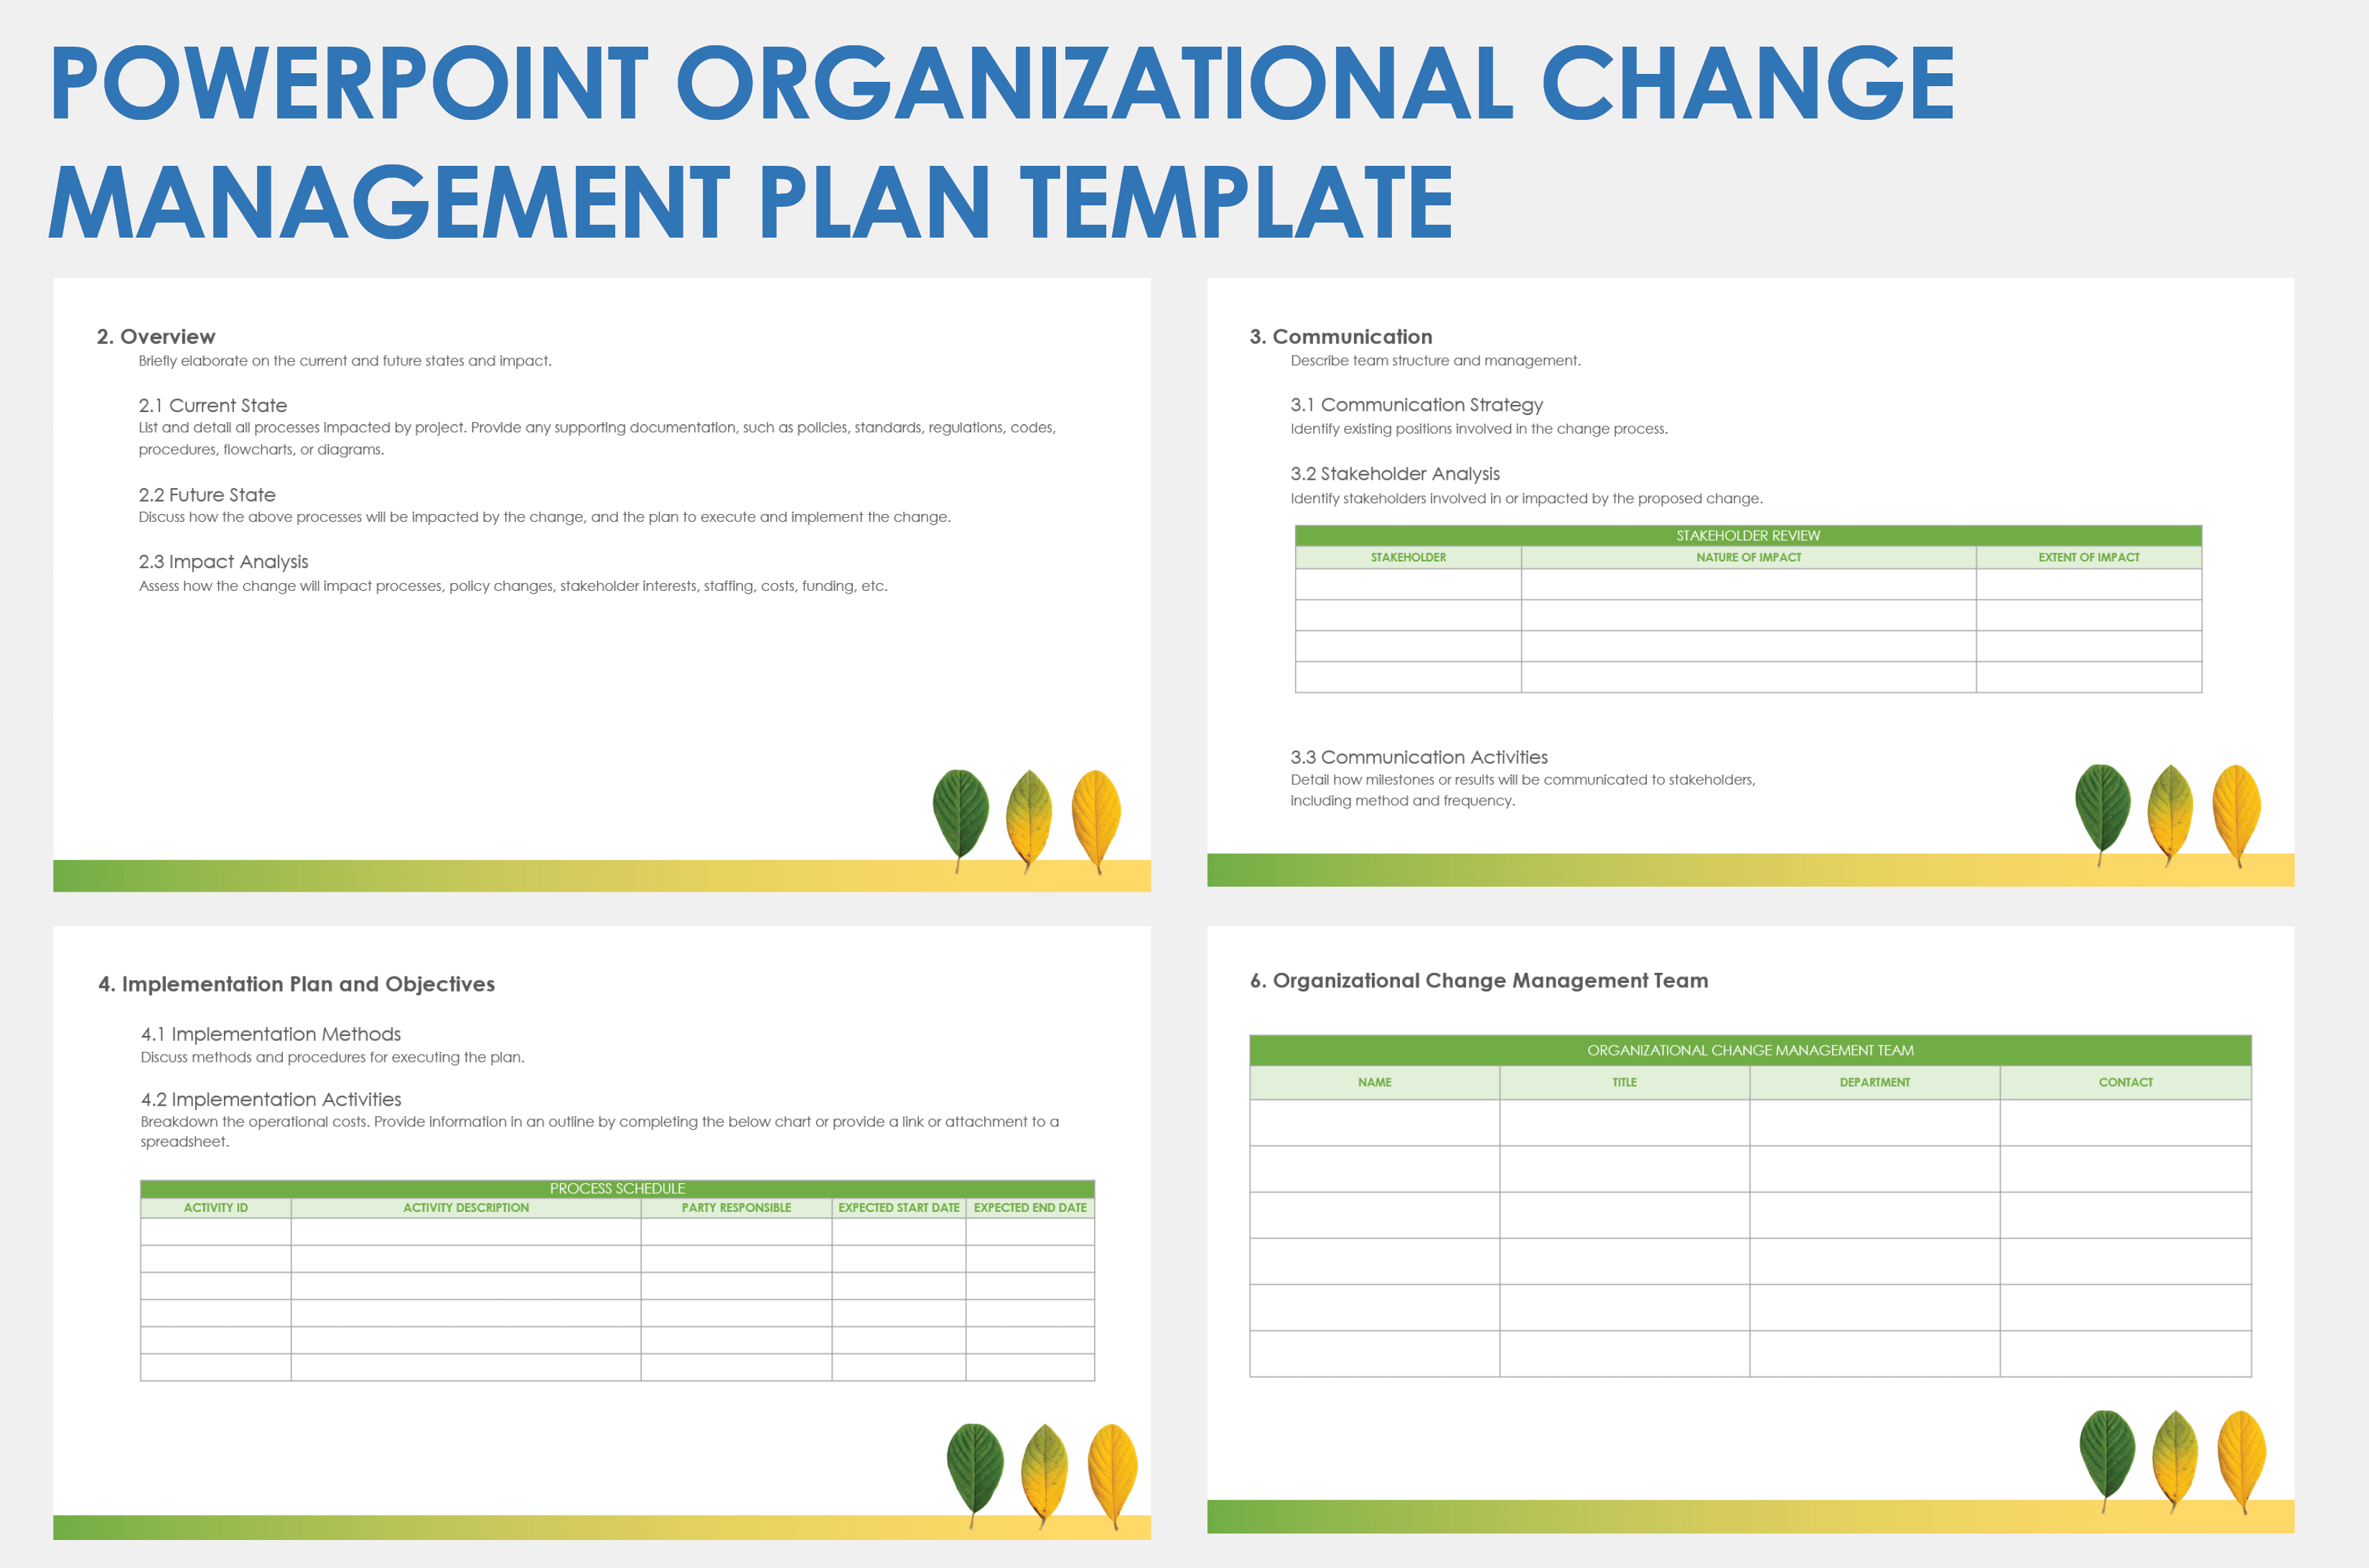 Organizational Change Management Plan Template PowerPoint